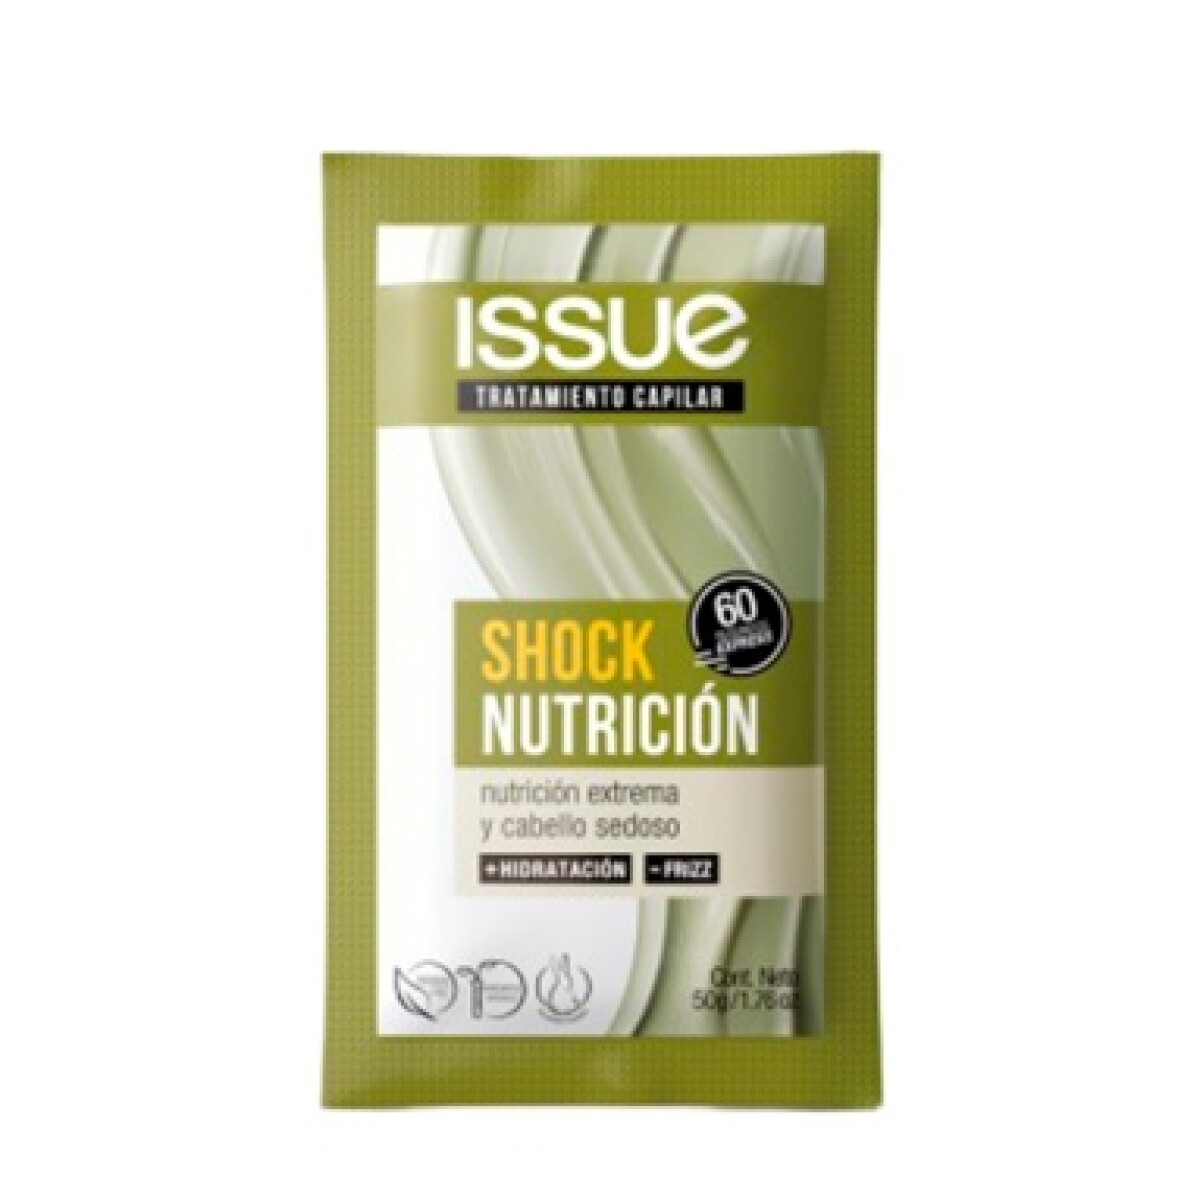 Issue Tratamiento Shock Nutricion 50g 